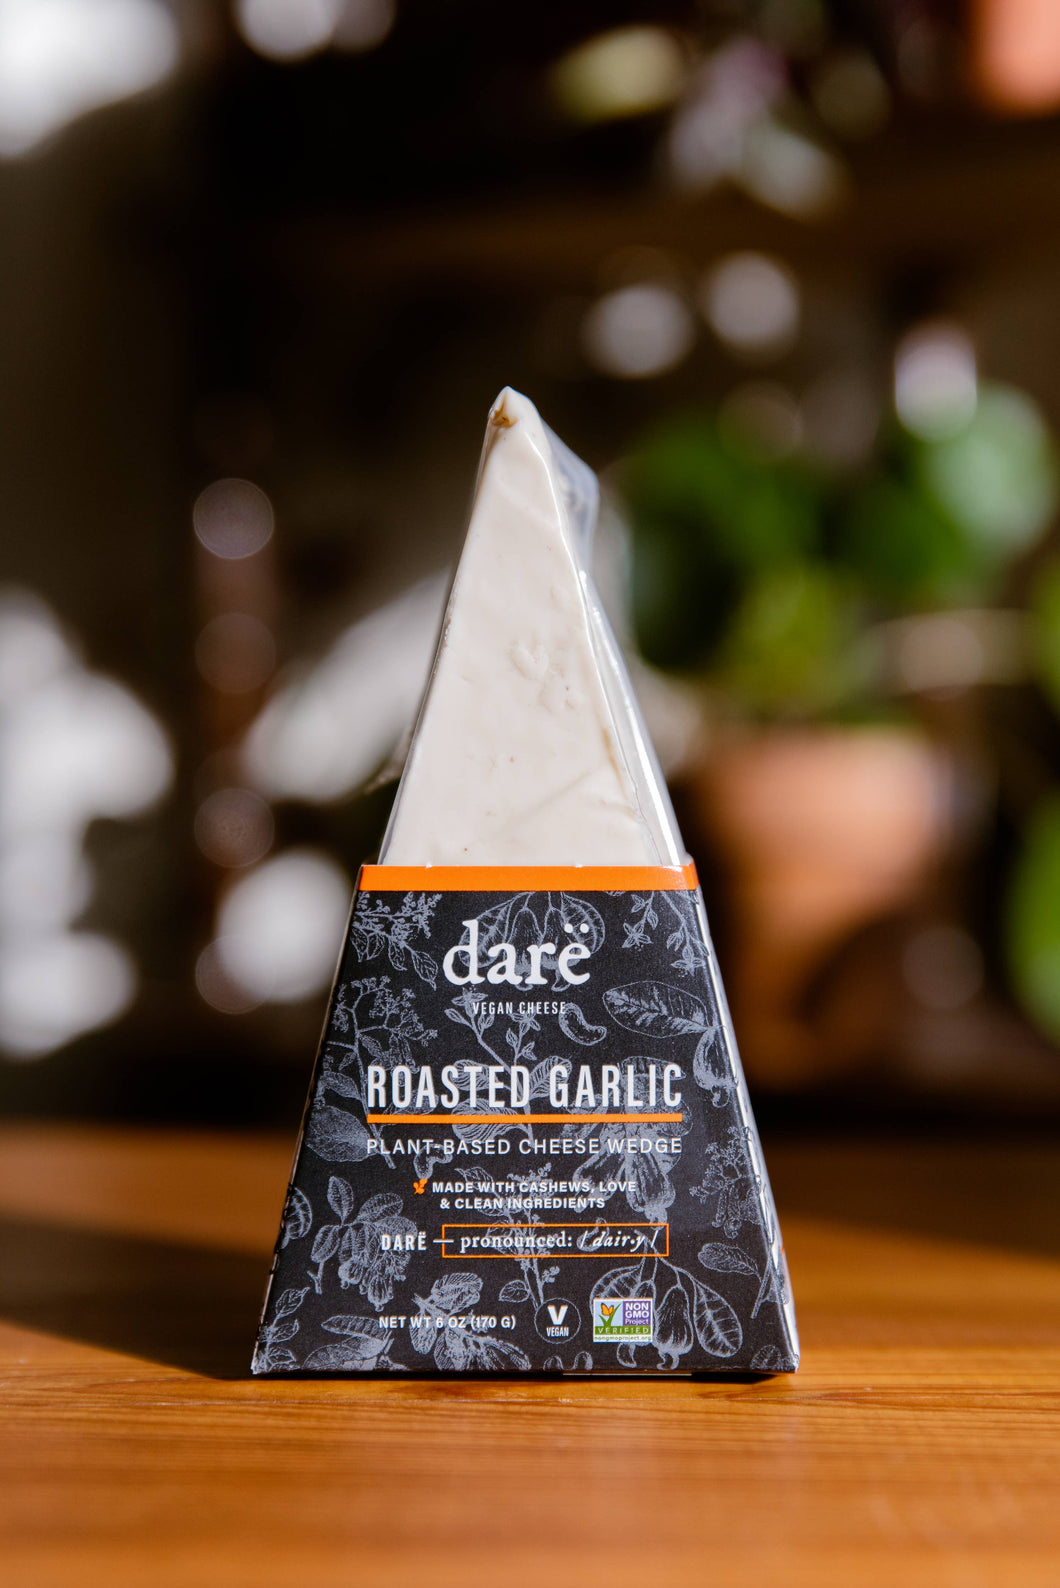 Darë Vegan Cheese - Roasted Garlic Plant-Based Cheese Wedge